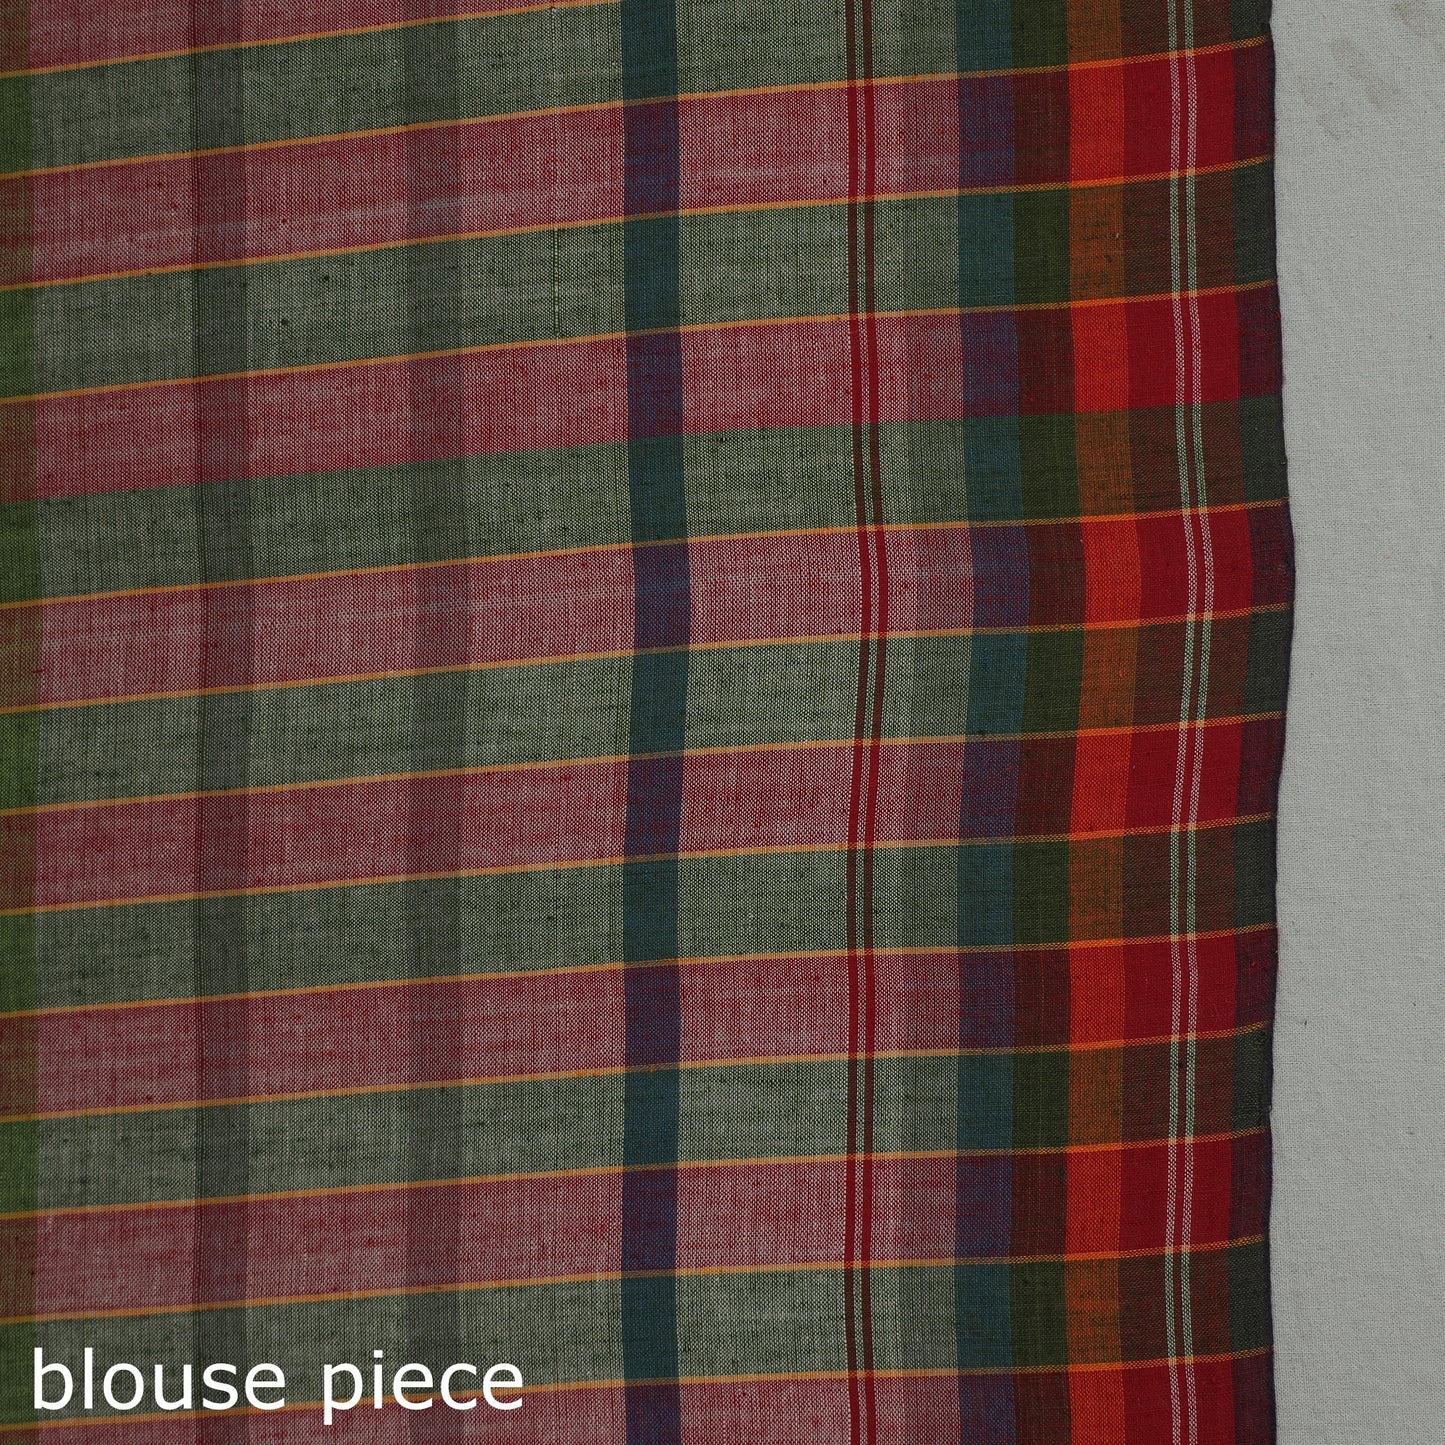 Multicolor - Birbhum Handloom Gamchha Pure Cotton Saree 30